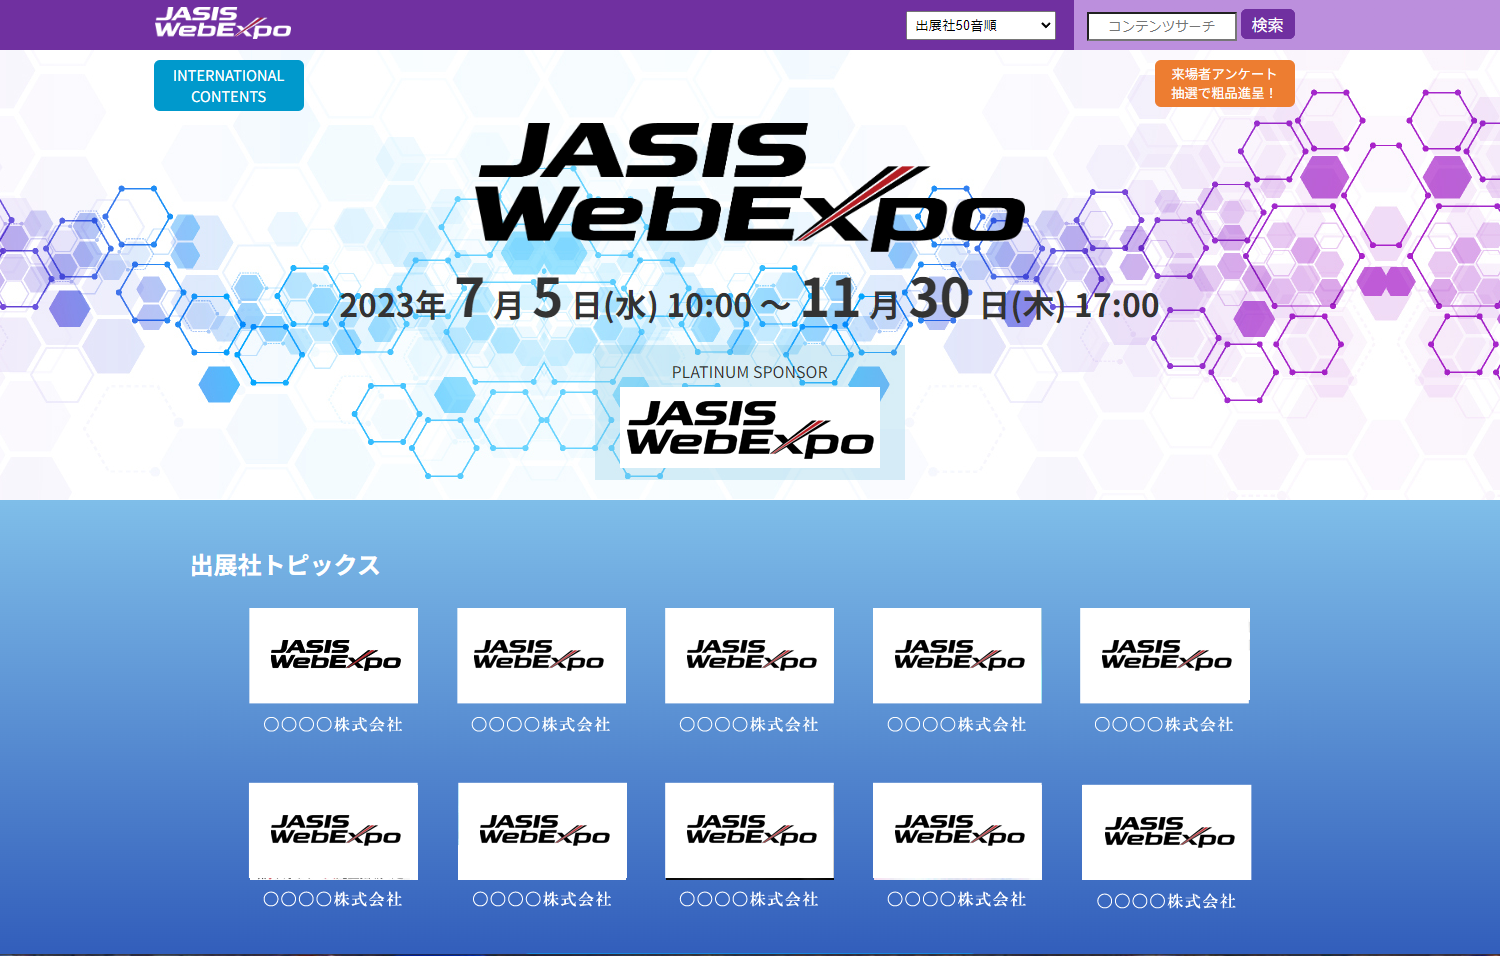 WebWyJASIS WebExpo(R) 2023z@́EȊw@̍ŐVZp̍uAiȂǖ400^CgJ